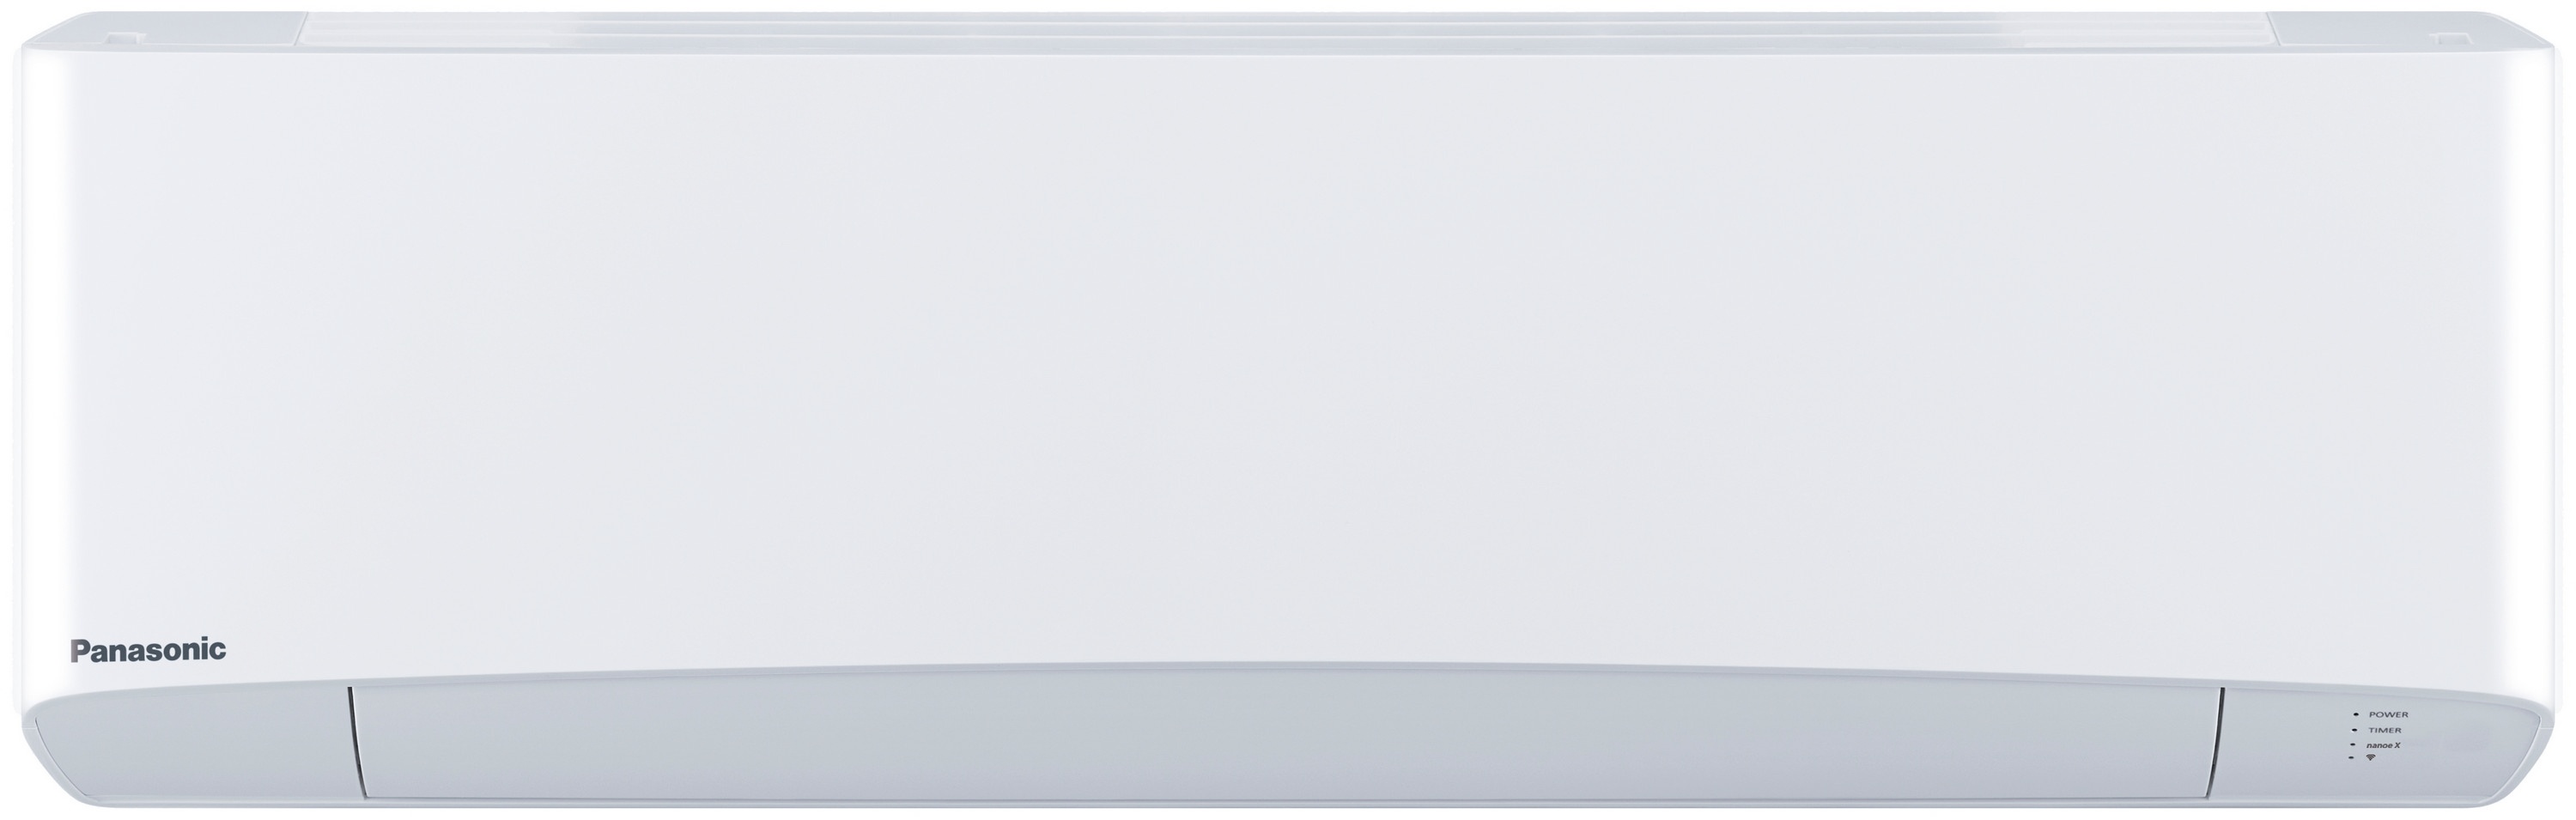 Кондиционер сплит-система Panasonic Flagship White CS/CU-Z20TKEW цена 39999.00 грн - фотография 2